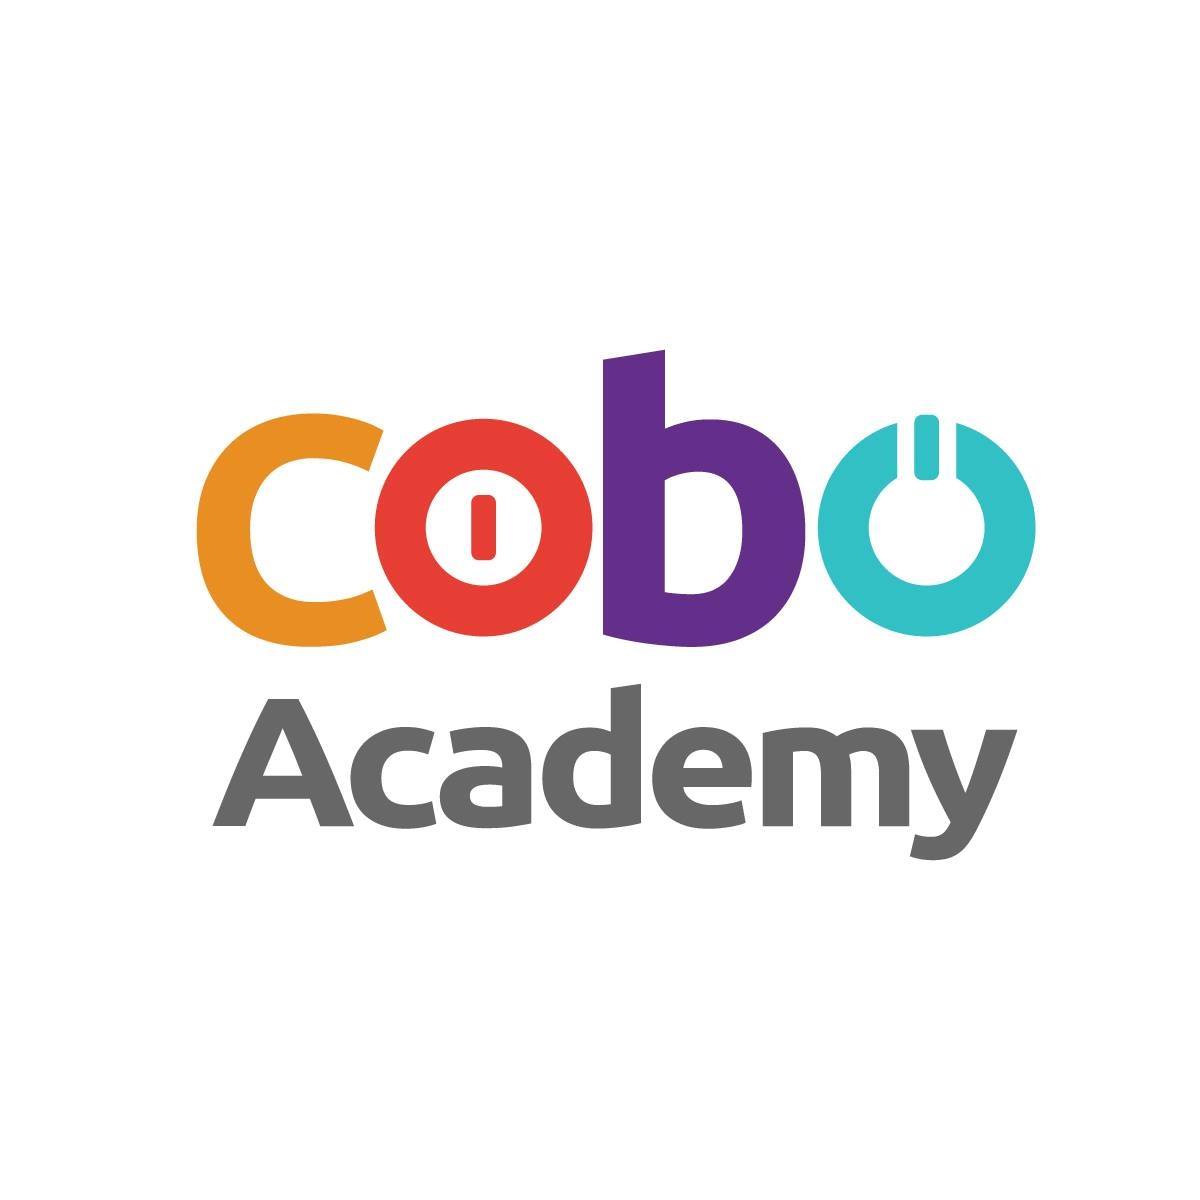 cobo academy logo